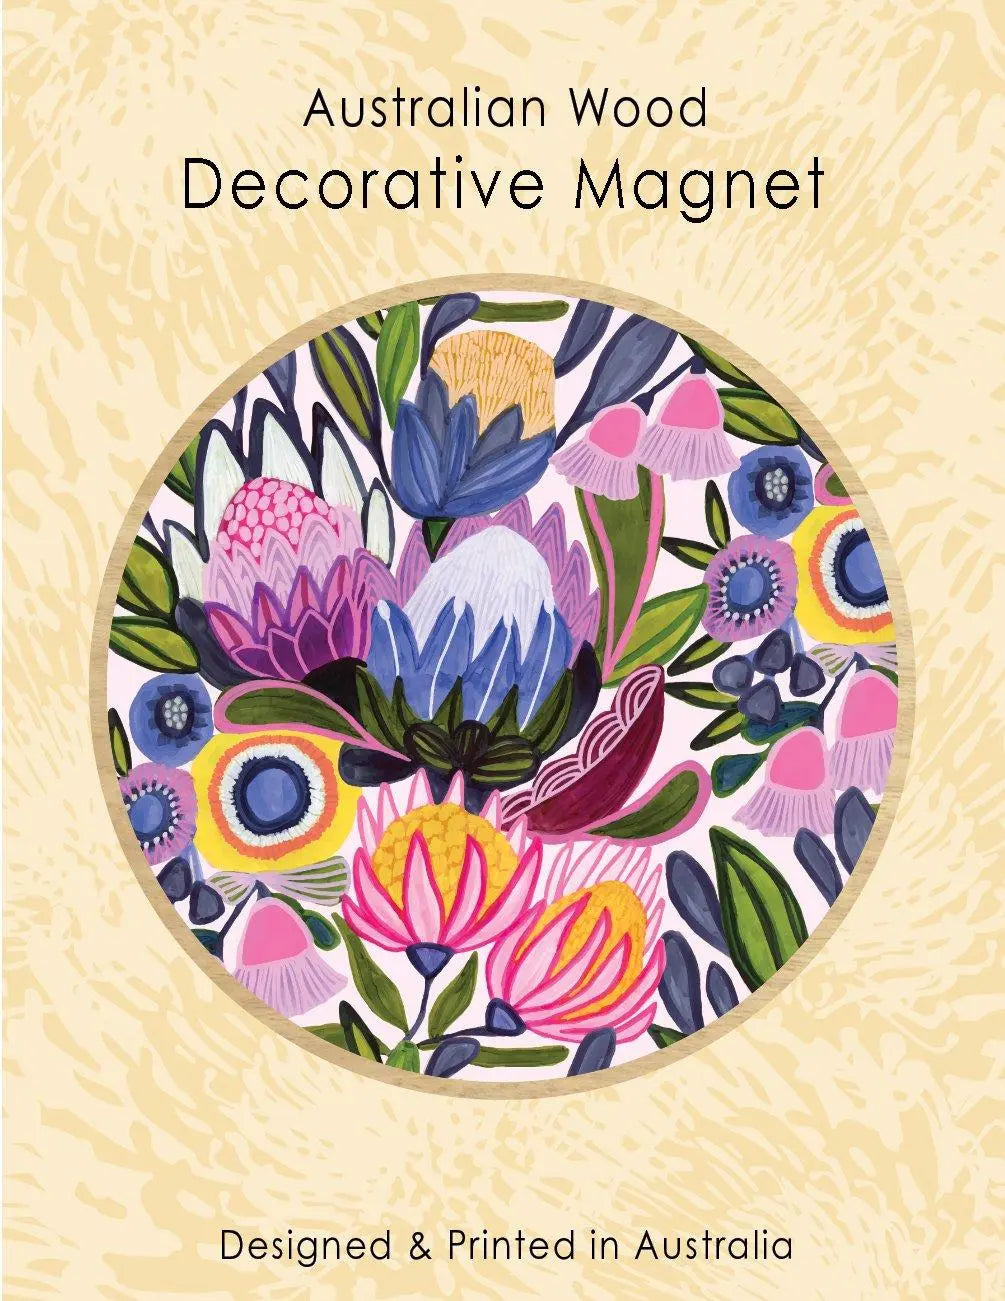 Home Decor Gift Set: Protea Magnifica Tea Towel & Fridge Magnet Kirsten Katz